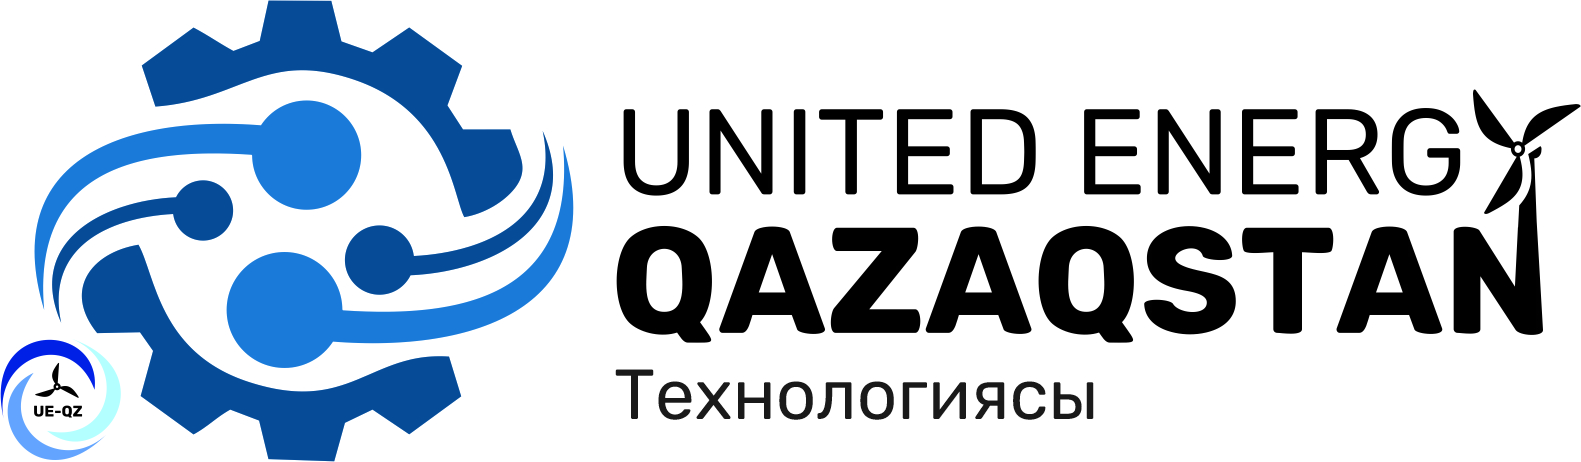 United Energy Qazaqstan Технологиясы